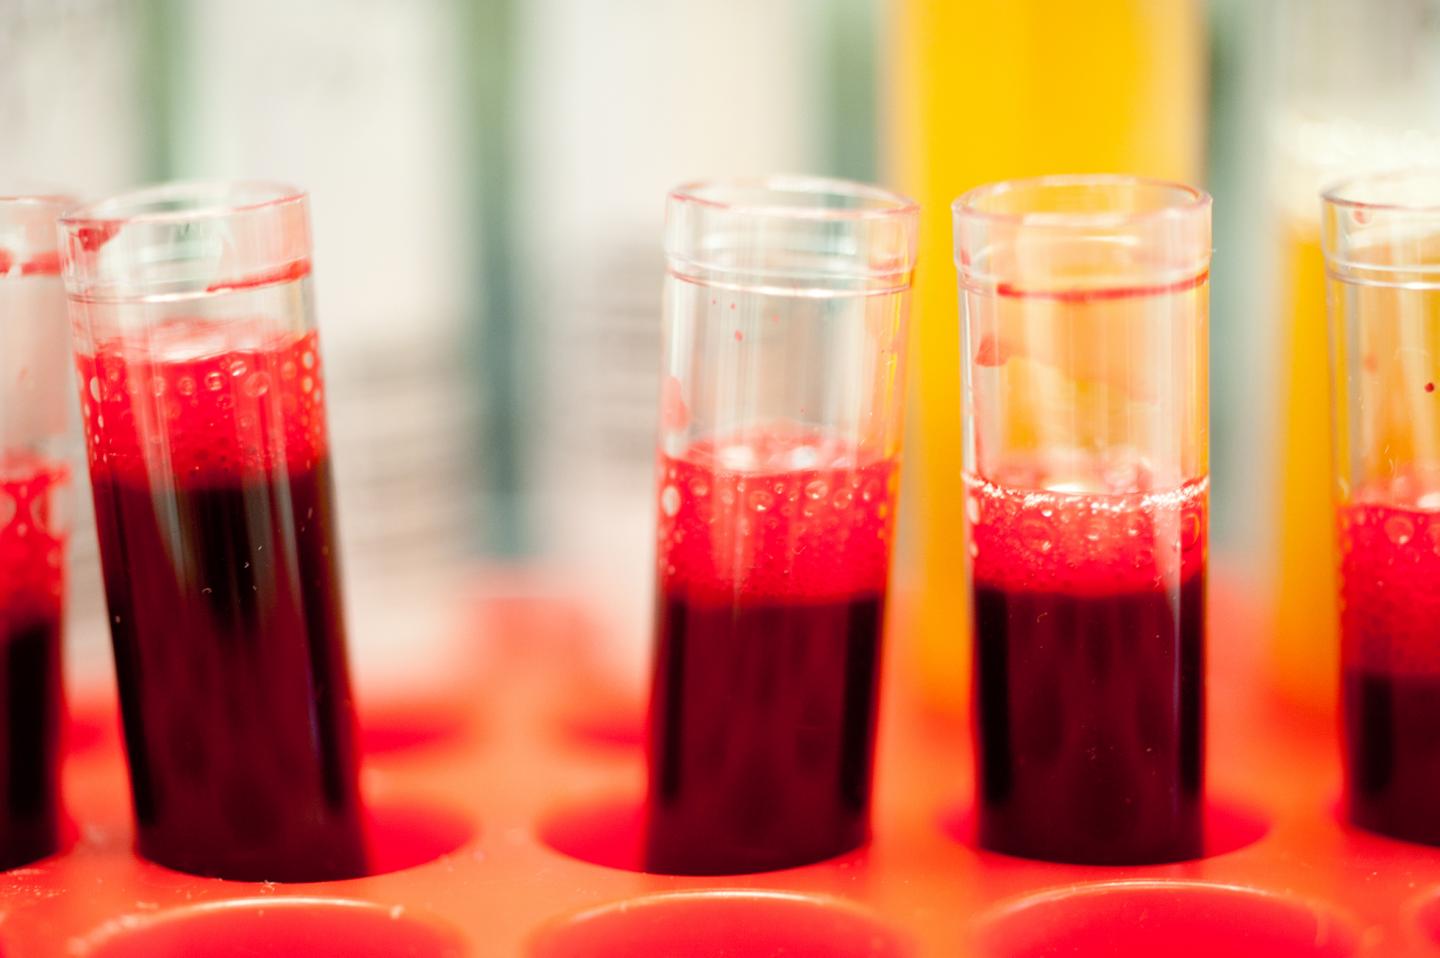 Blood Sample Test Tubes